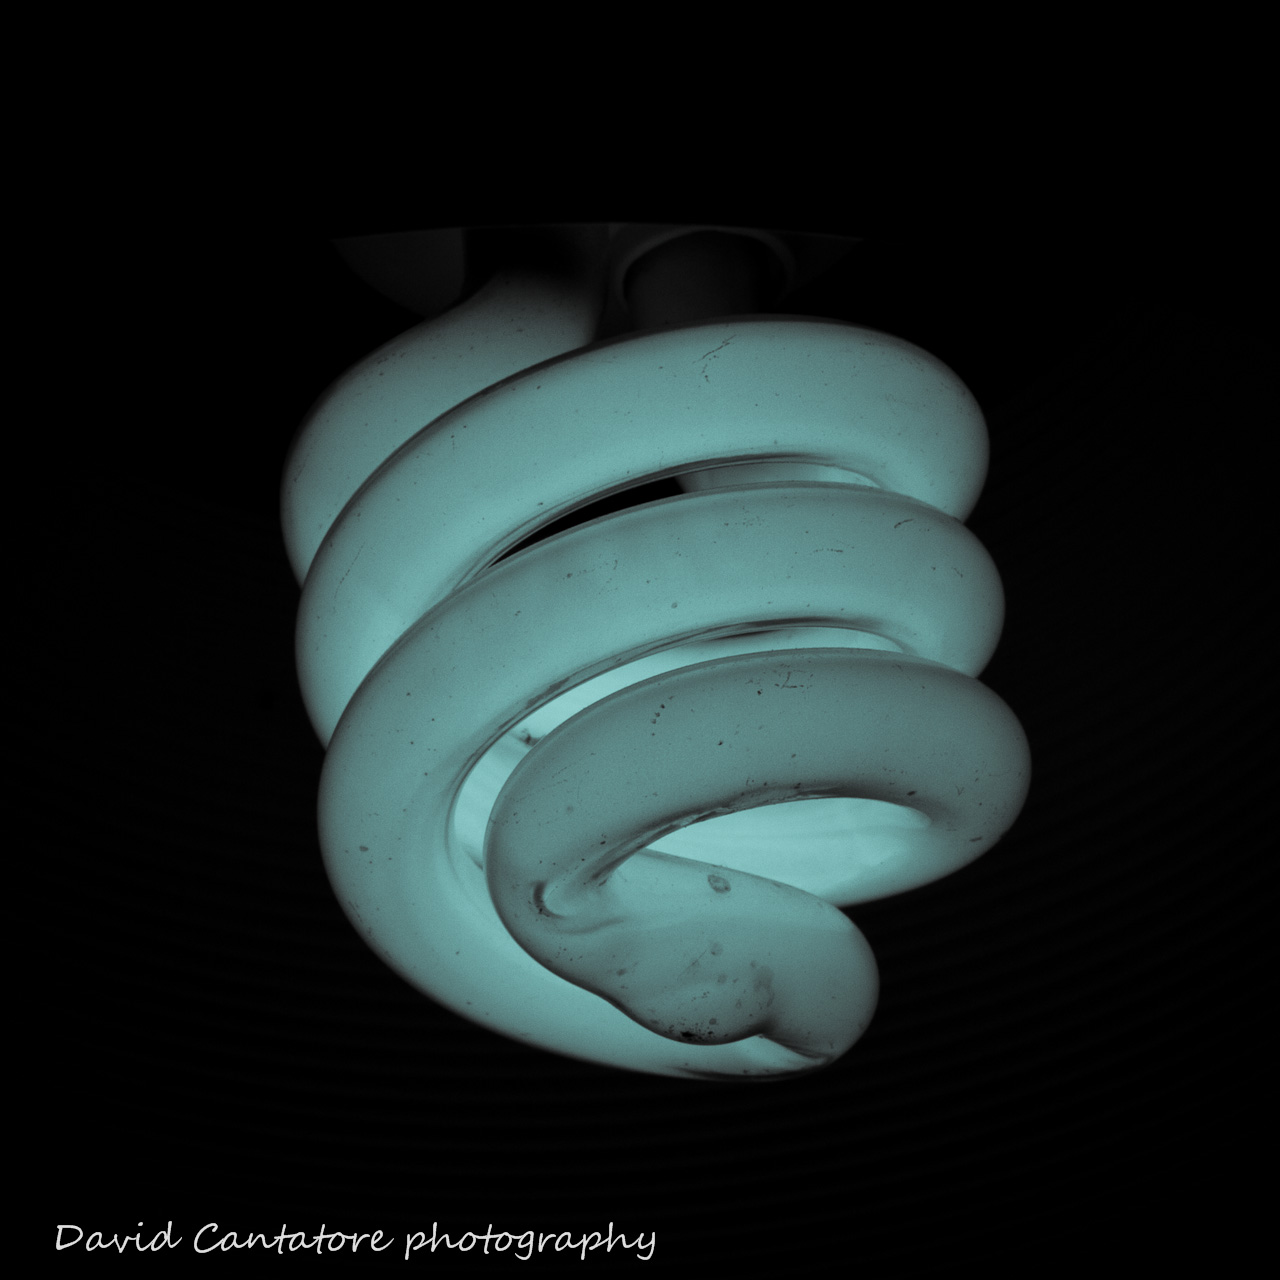 Lightbulb for convoluted, low energy ideas